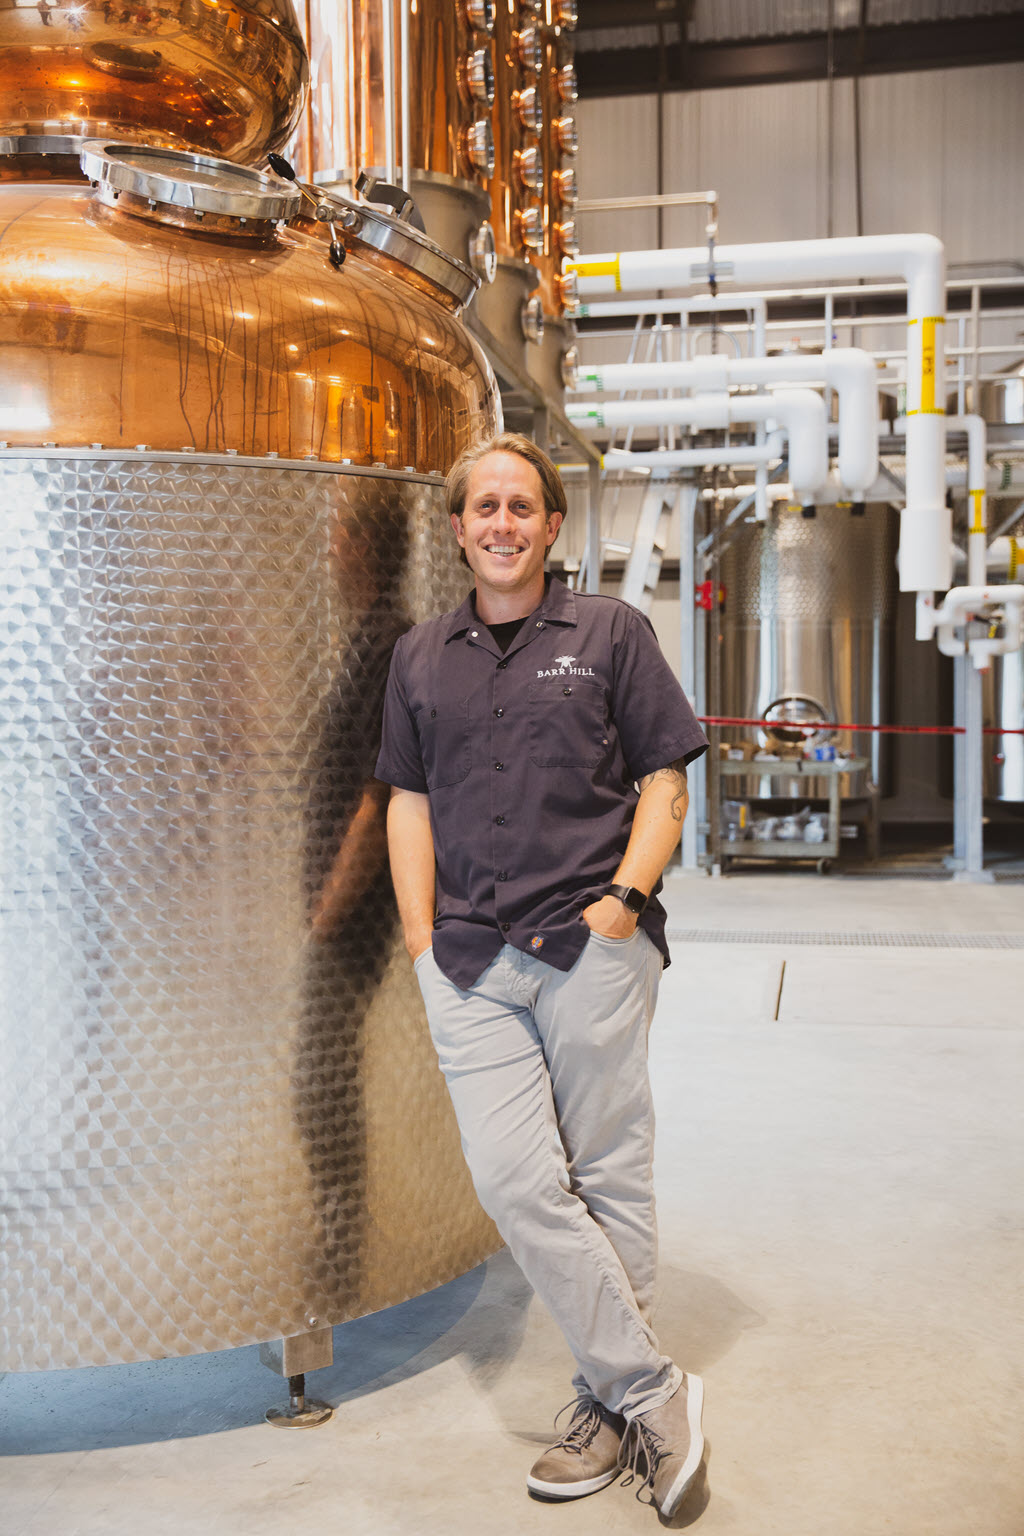 Caledonia Spirits - President and Head Distiller Ryan Christiansen